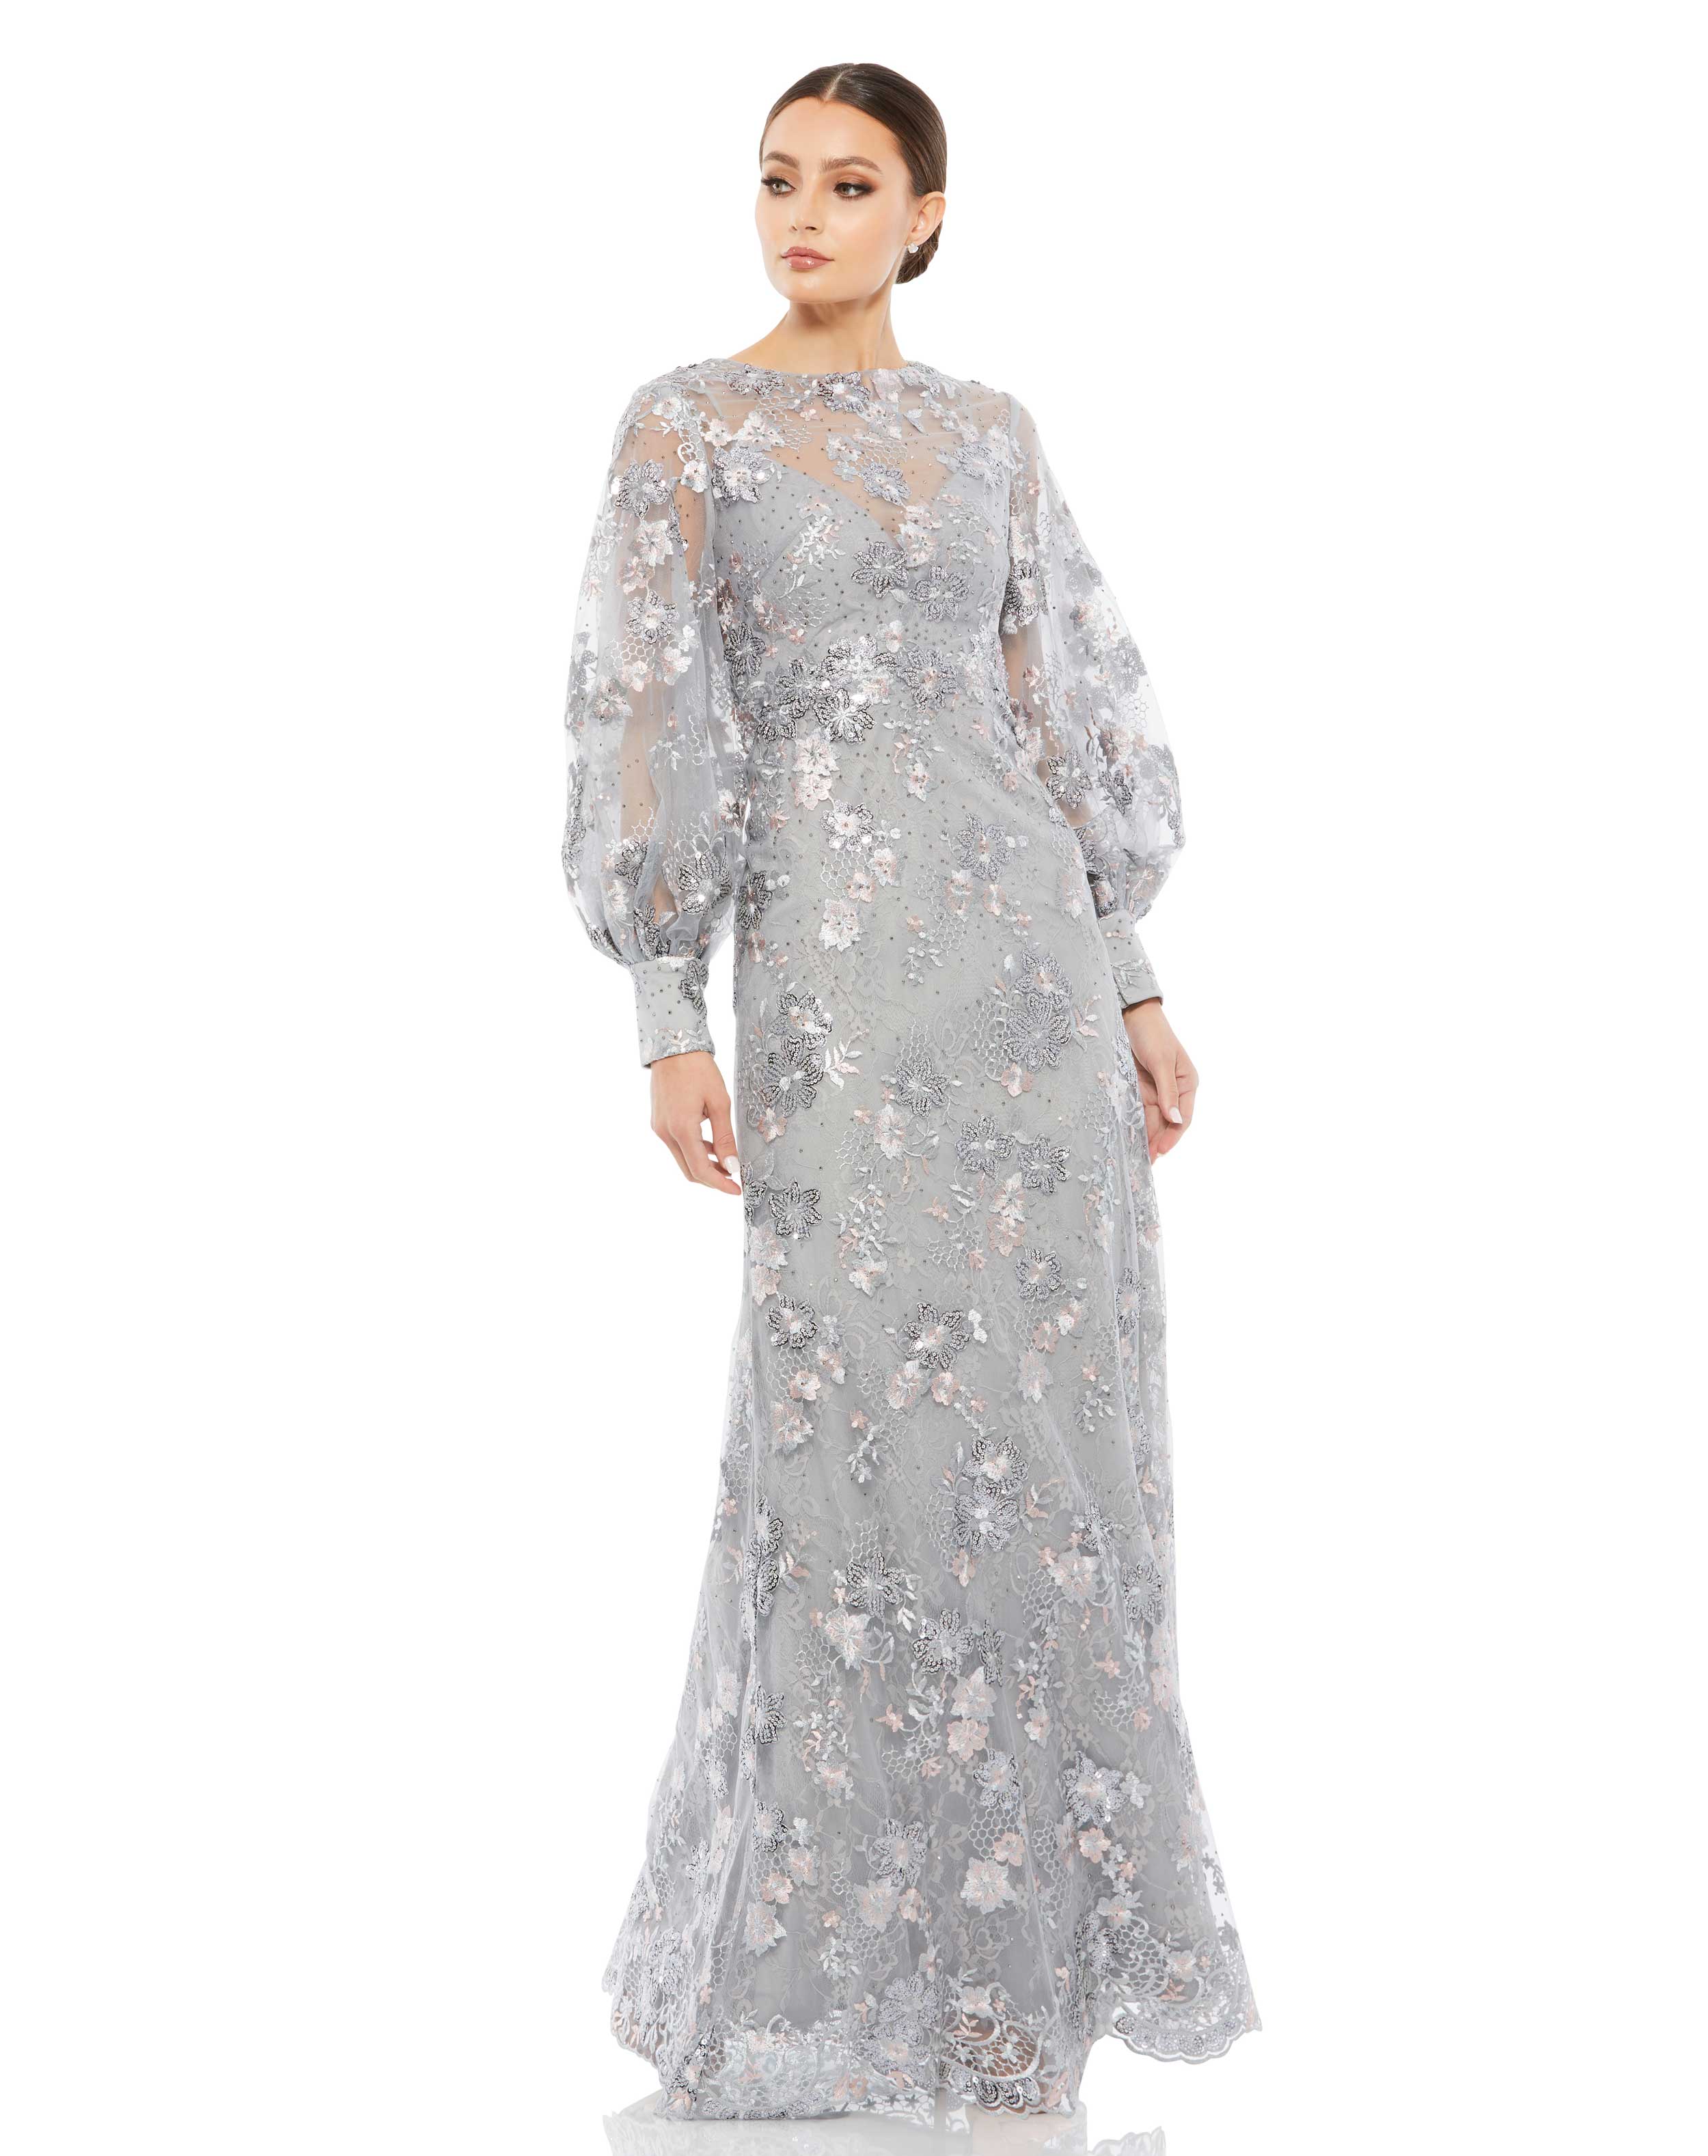 Embellished Illusion High Neck Bishop Sleeve Gown – Mac Duggal